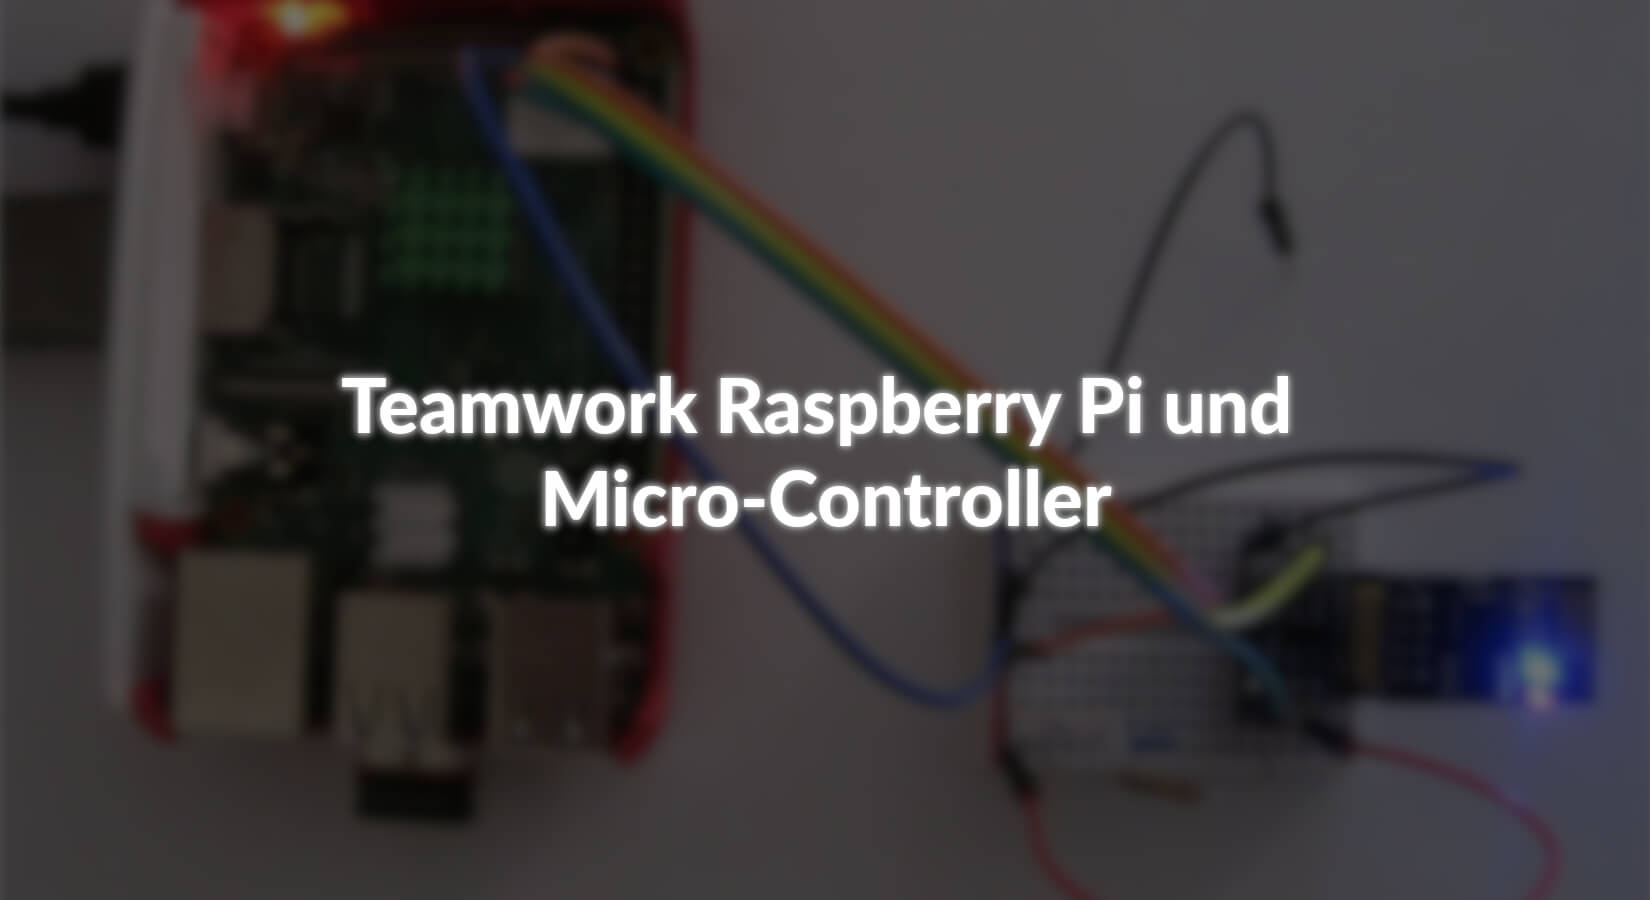 Teamwork Raspberry Pi und Micro-Controller - AZ-Delivery